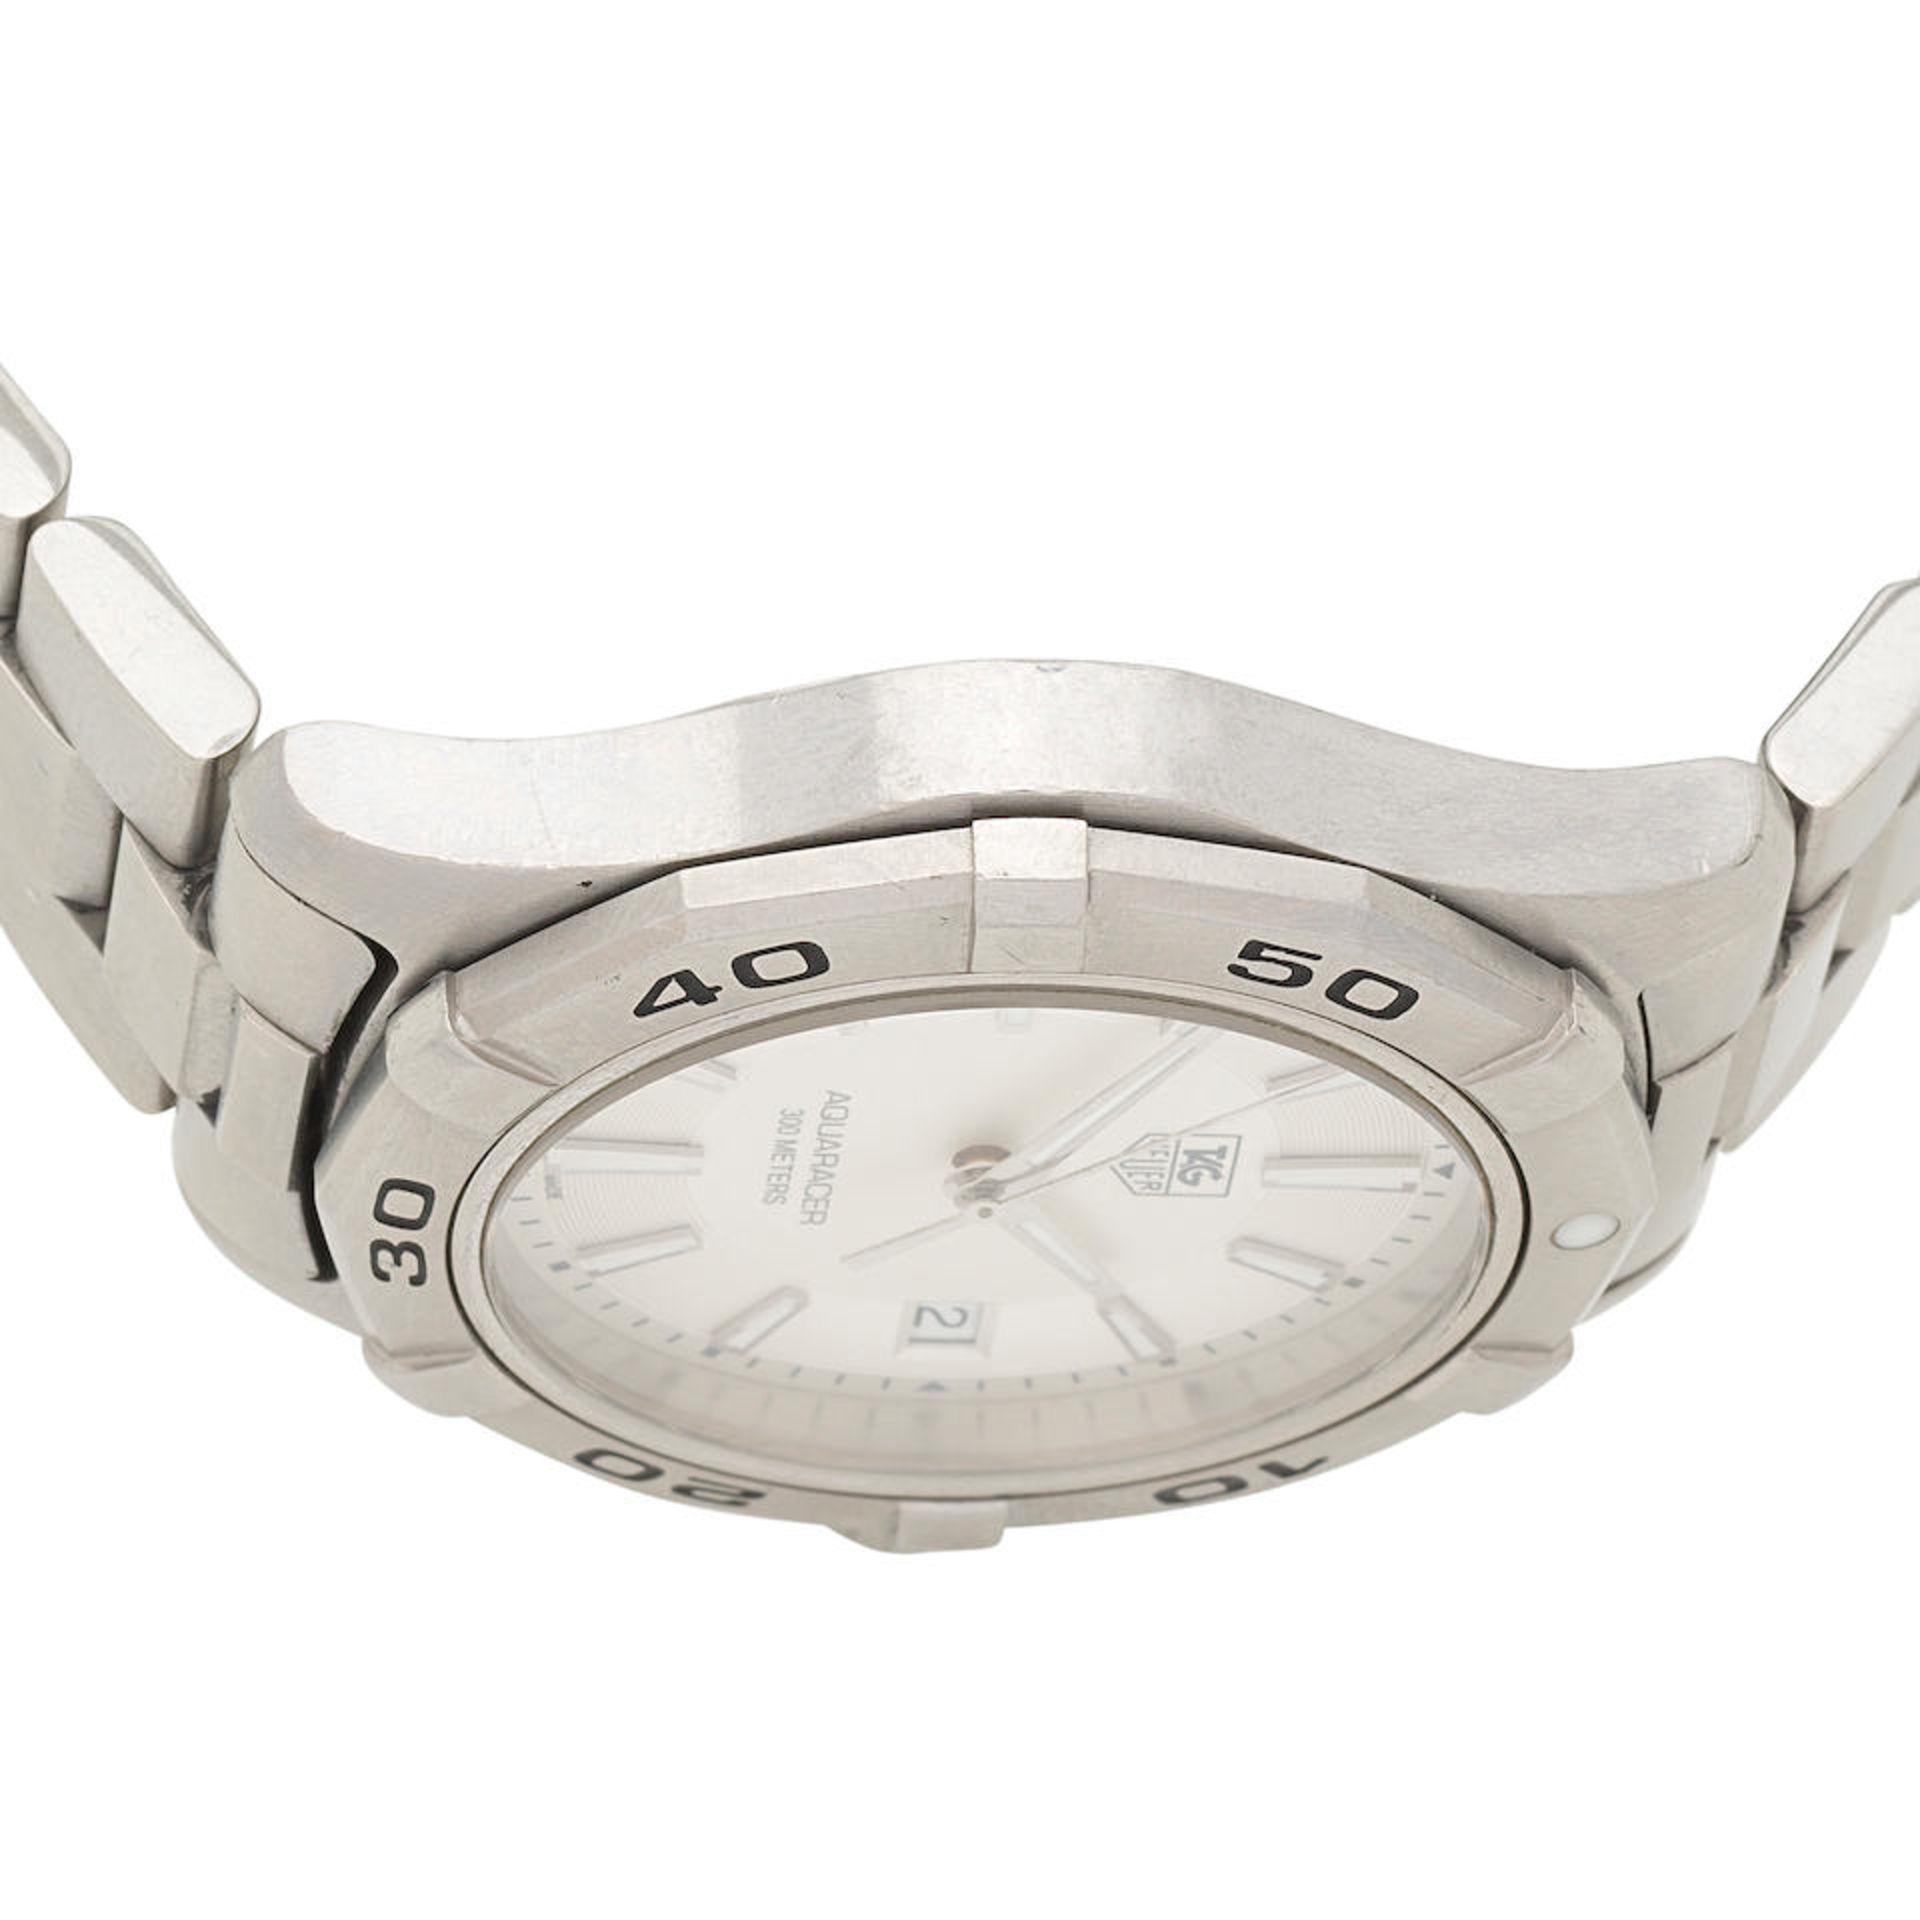 TAG Heuer. A stainless steel quartz calendar bracelet watch Aquaracer, Ref: WAP1111, Circa 2010 - Image 2 of 4